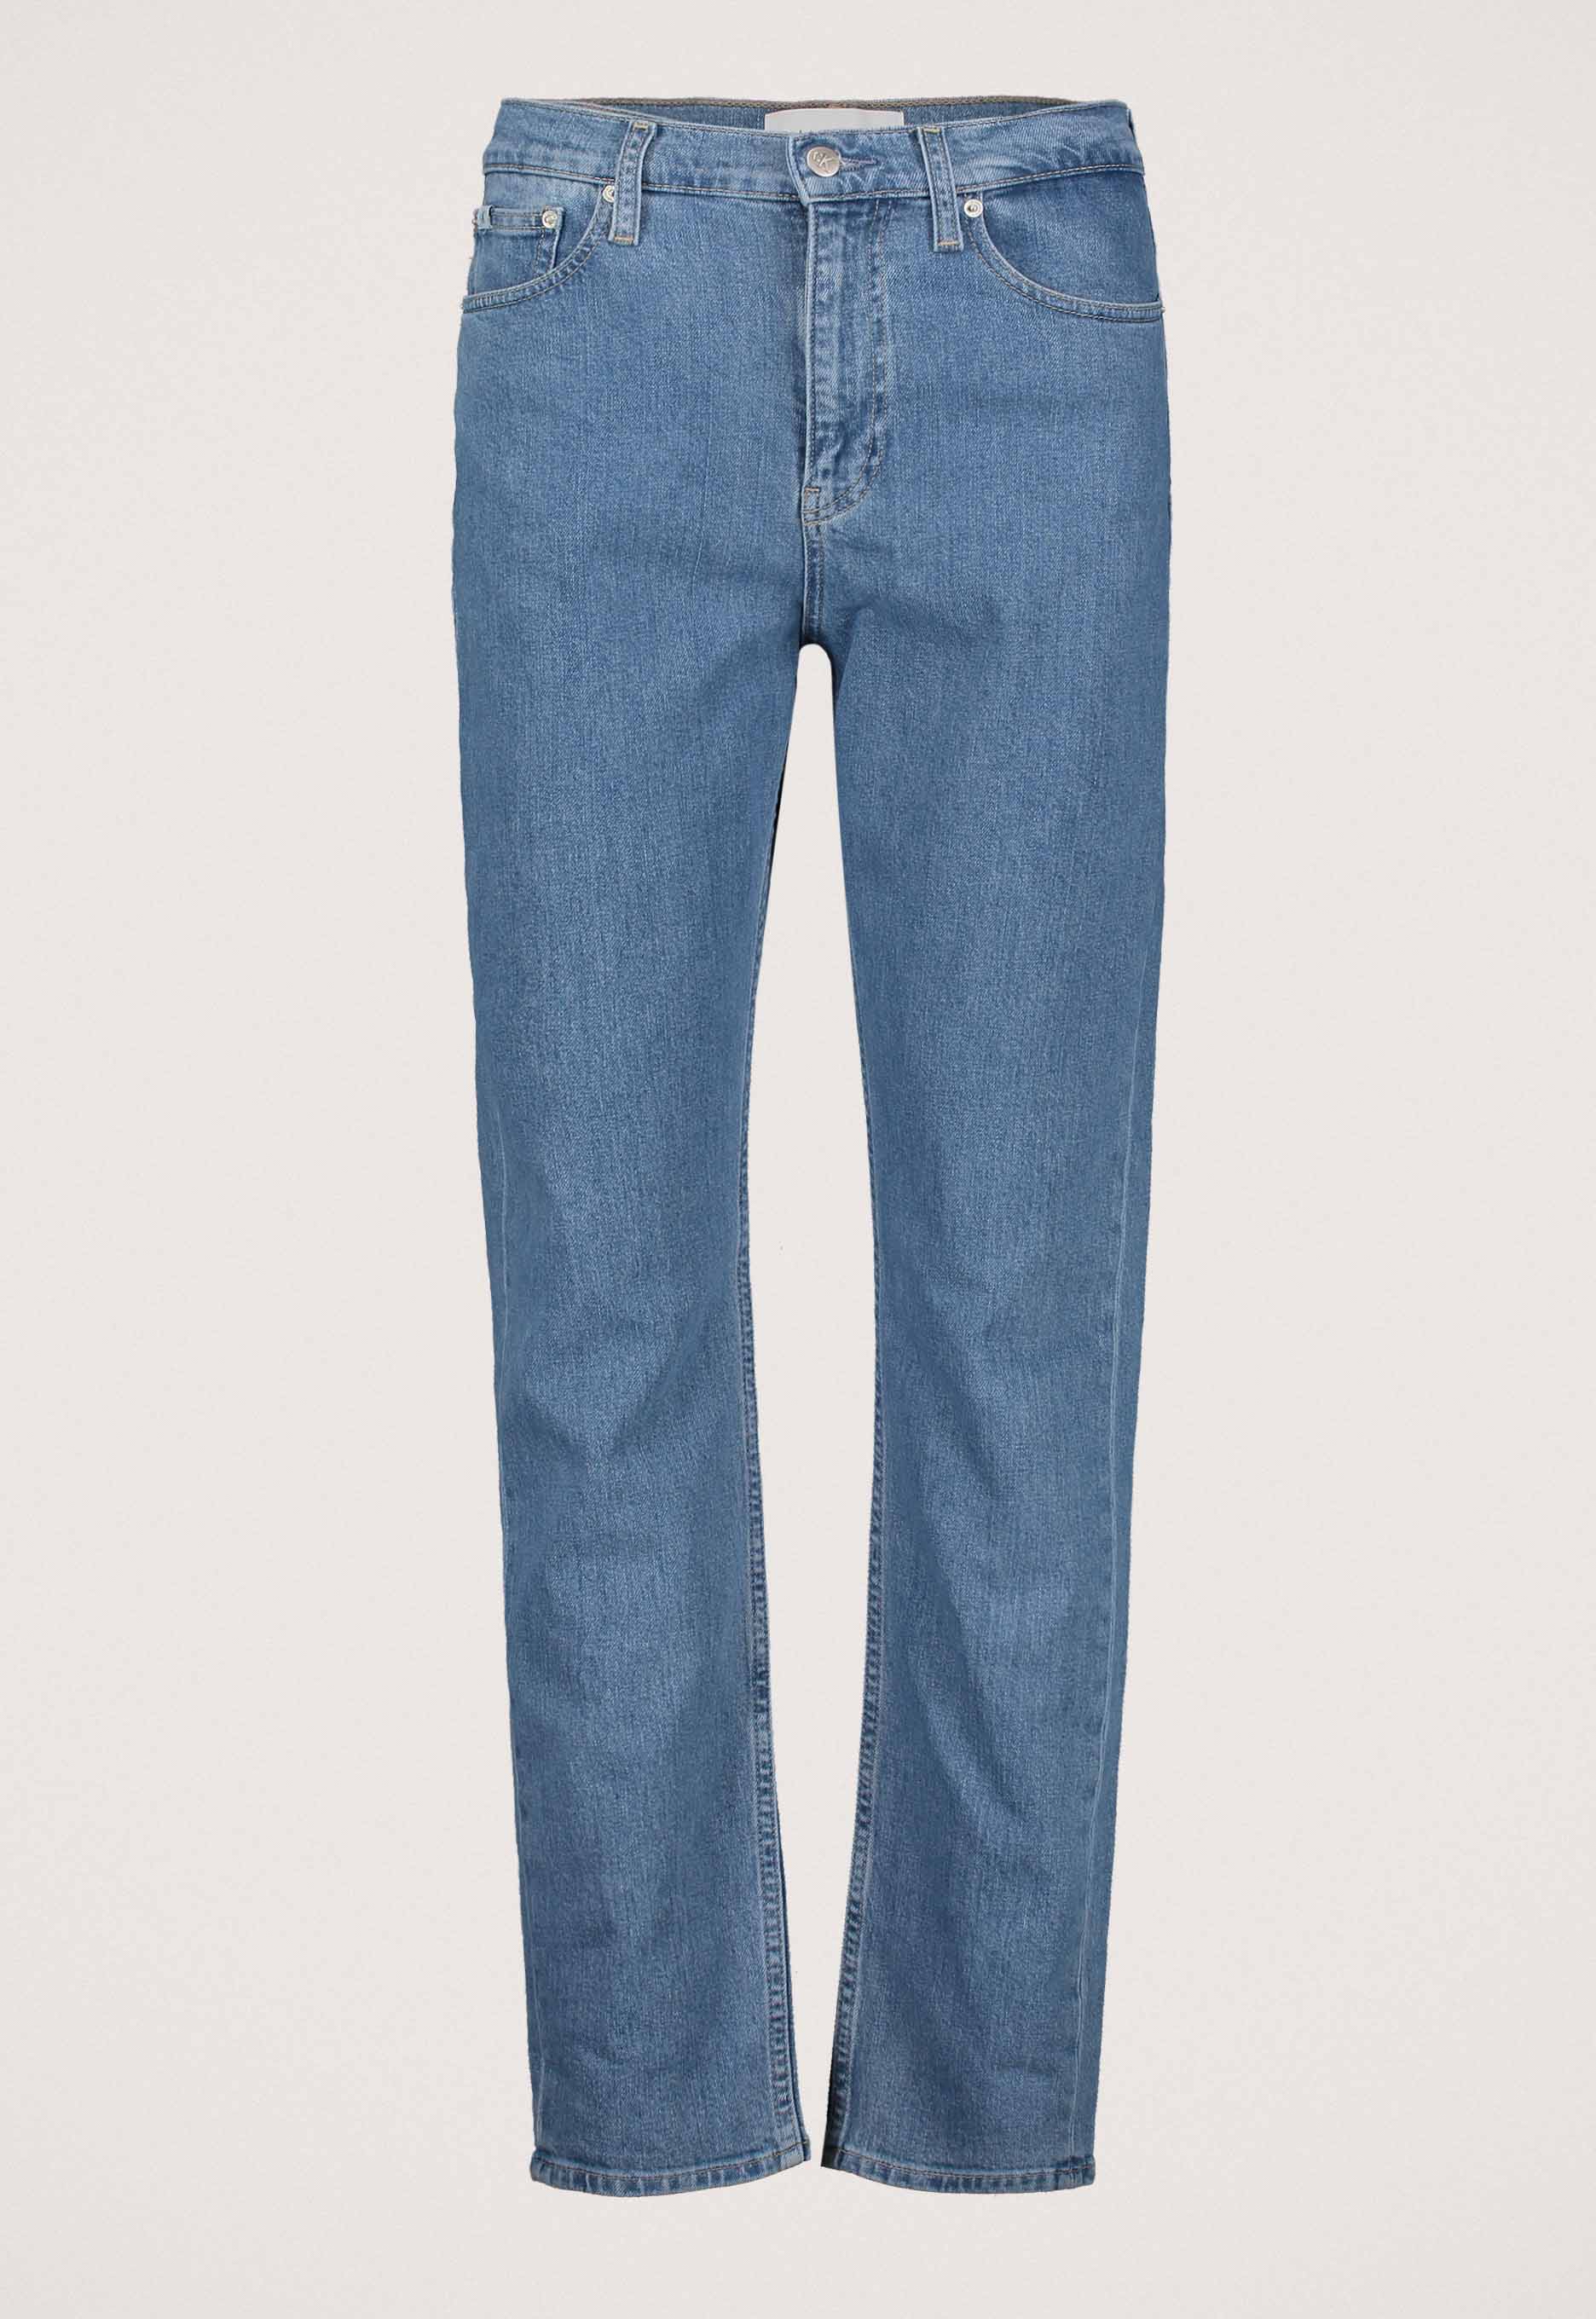 Calvin klein Authentic Slim Straight Jeans